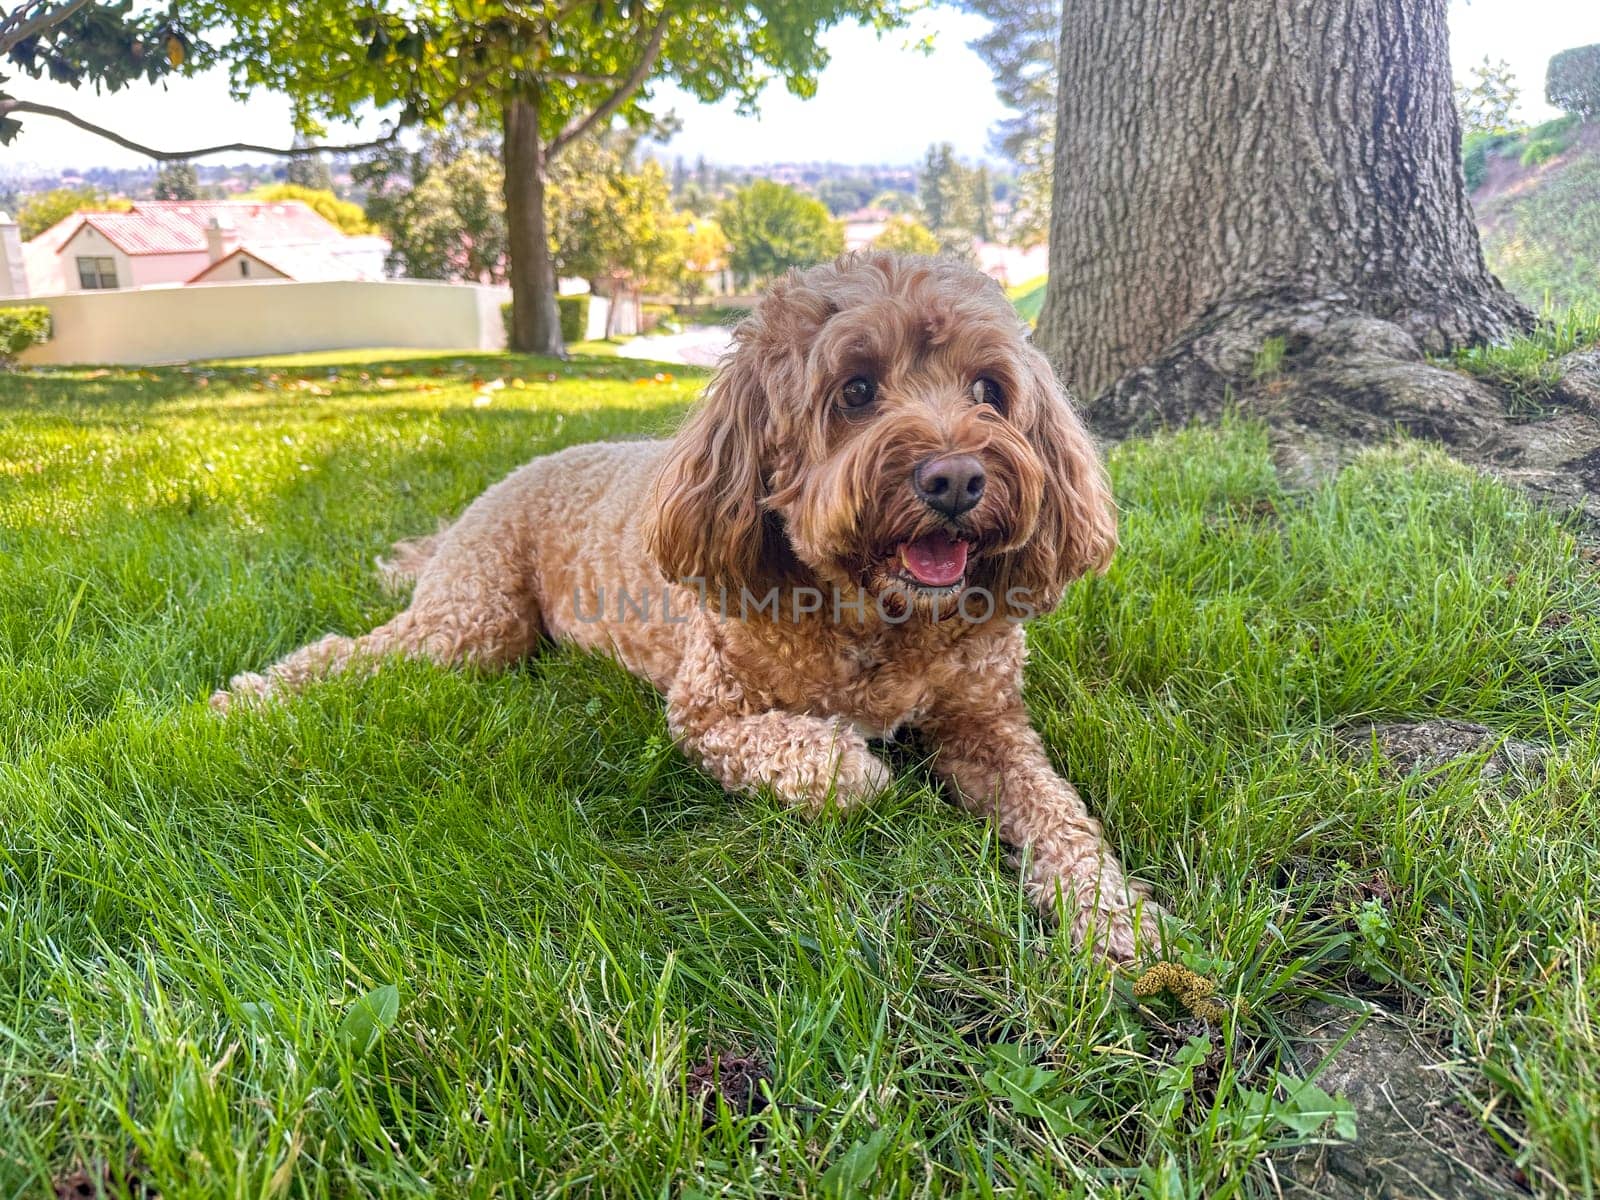 Cute Fluffy Cavapoo Dog on the Grass in a Park